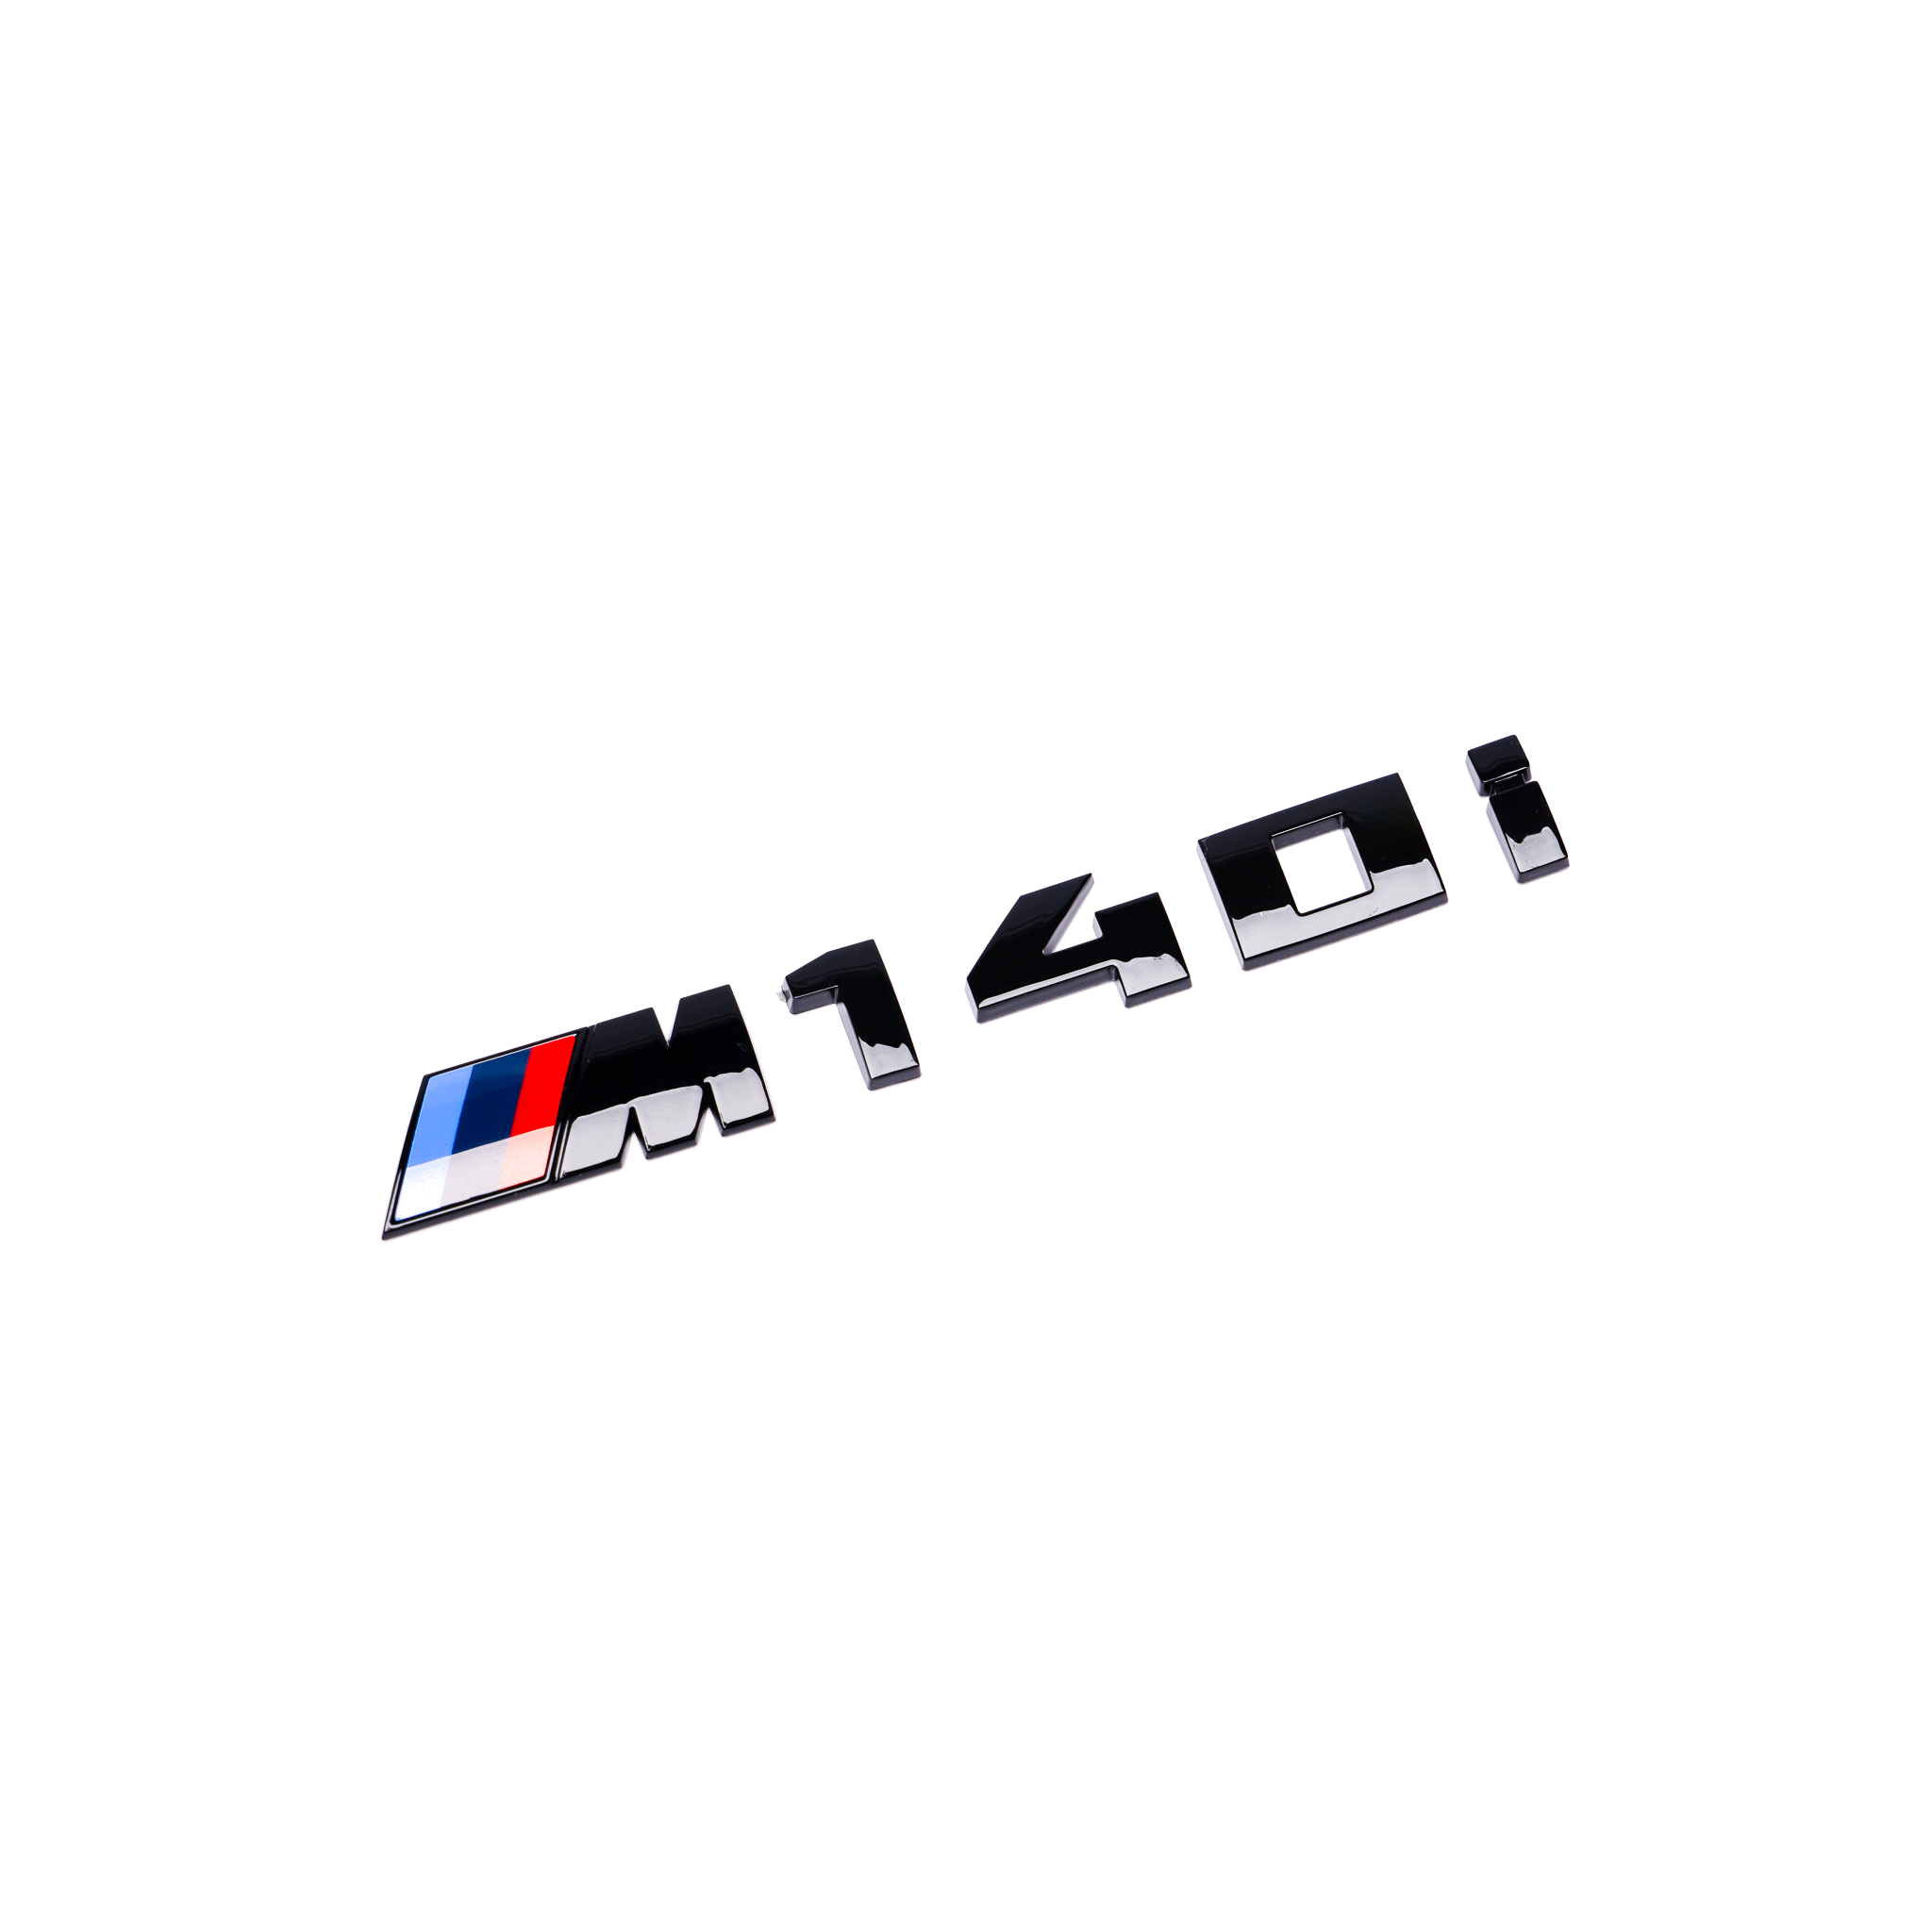 Exon Gloss Black M140i Emblema para maletero para BMW 1-Series M140i F20